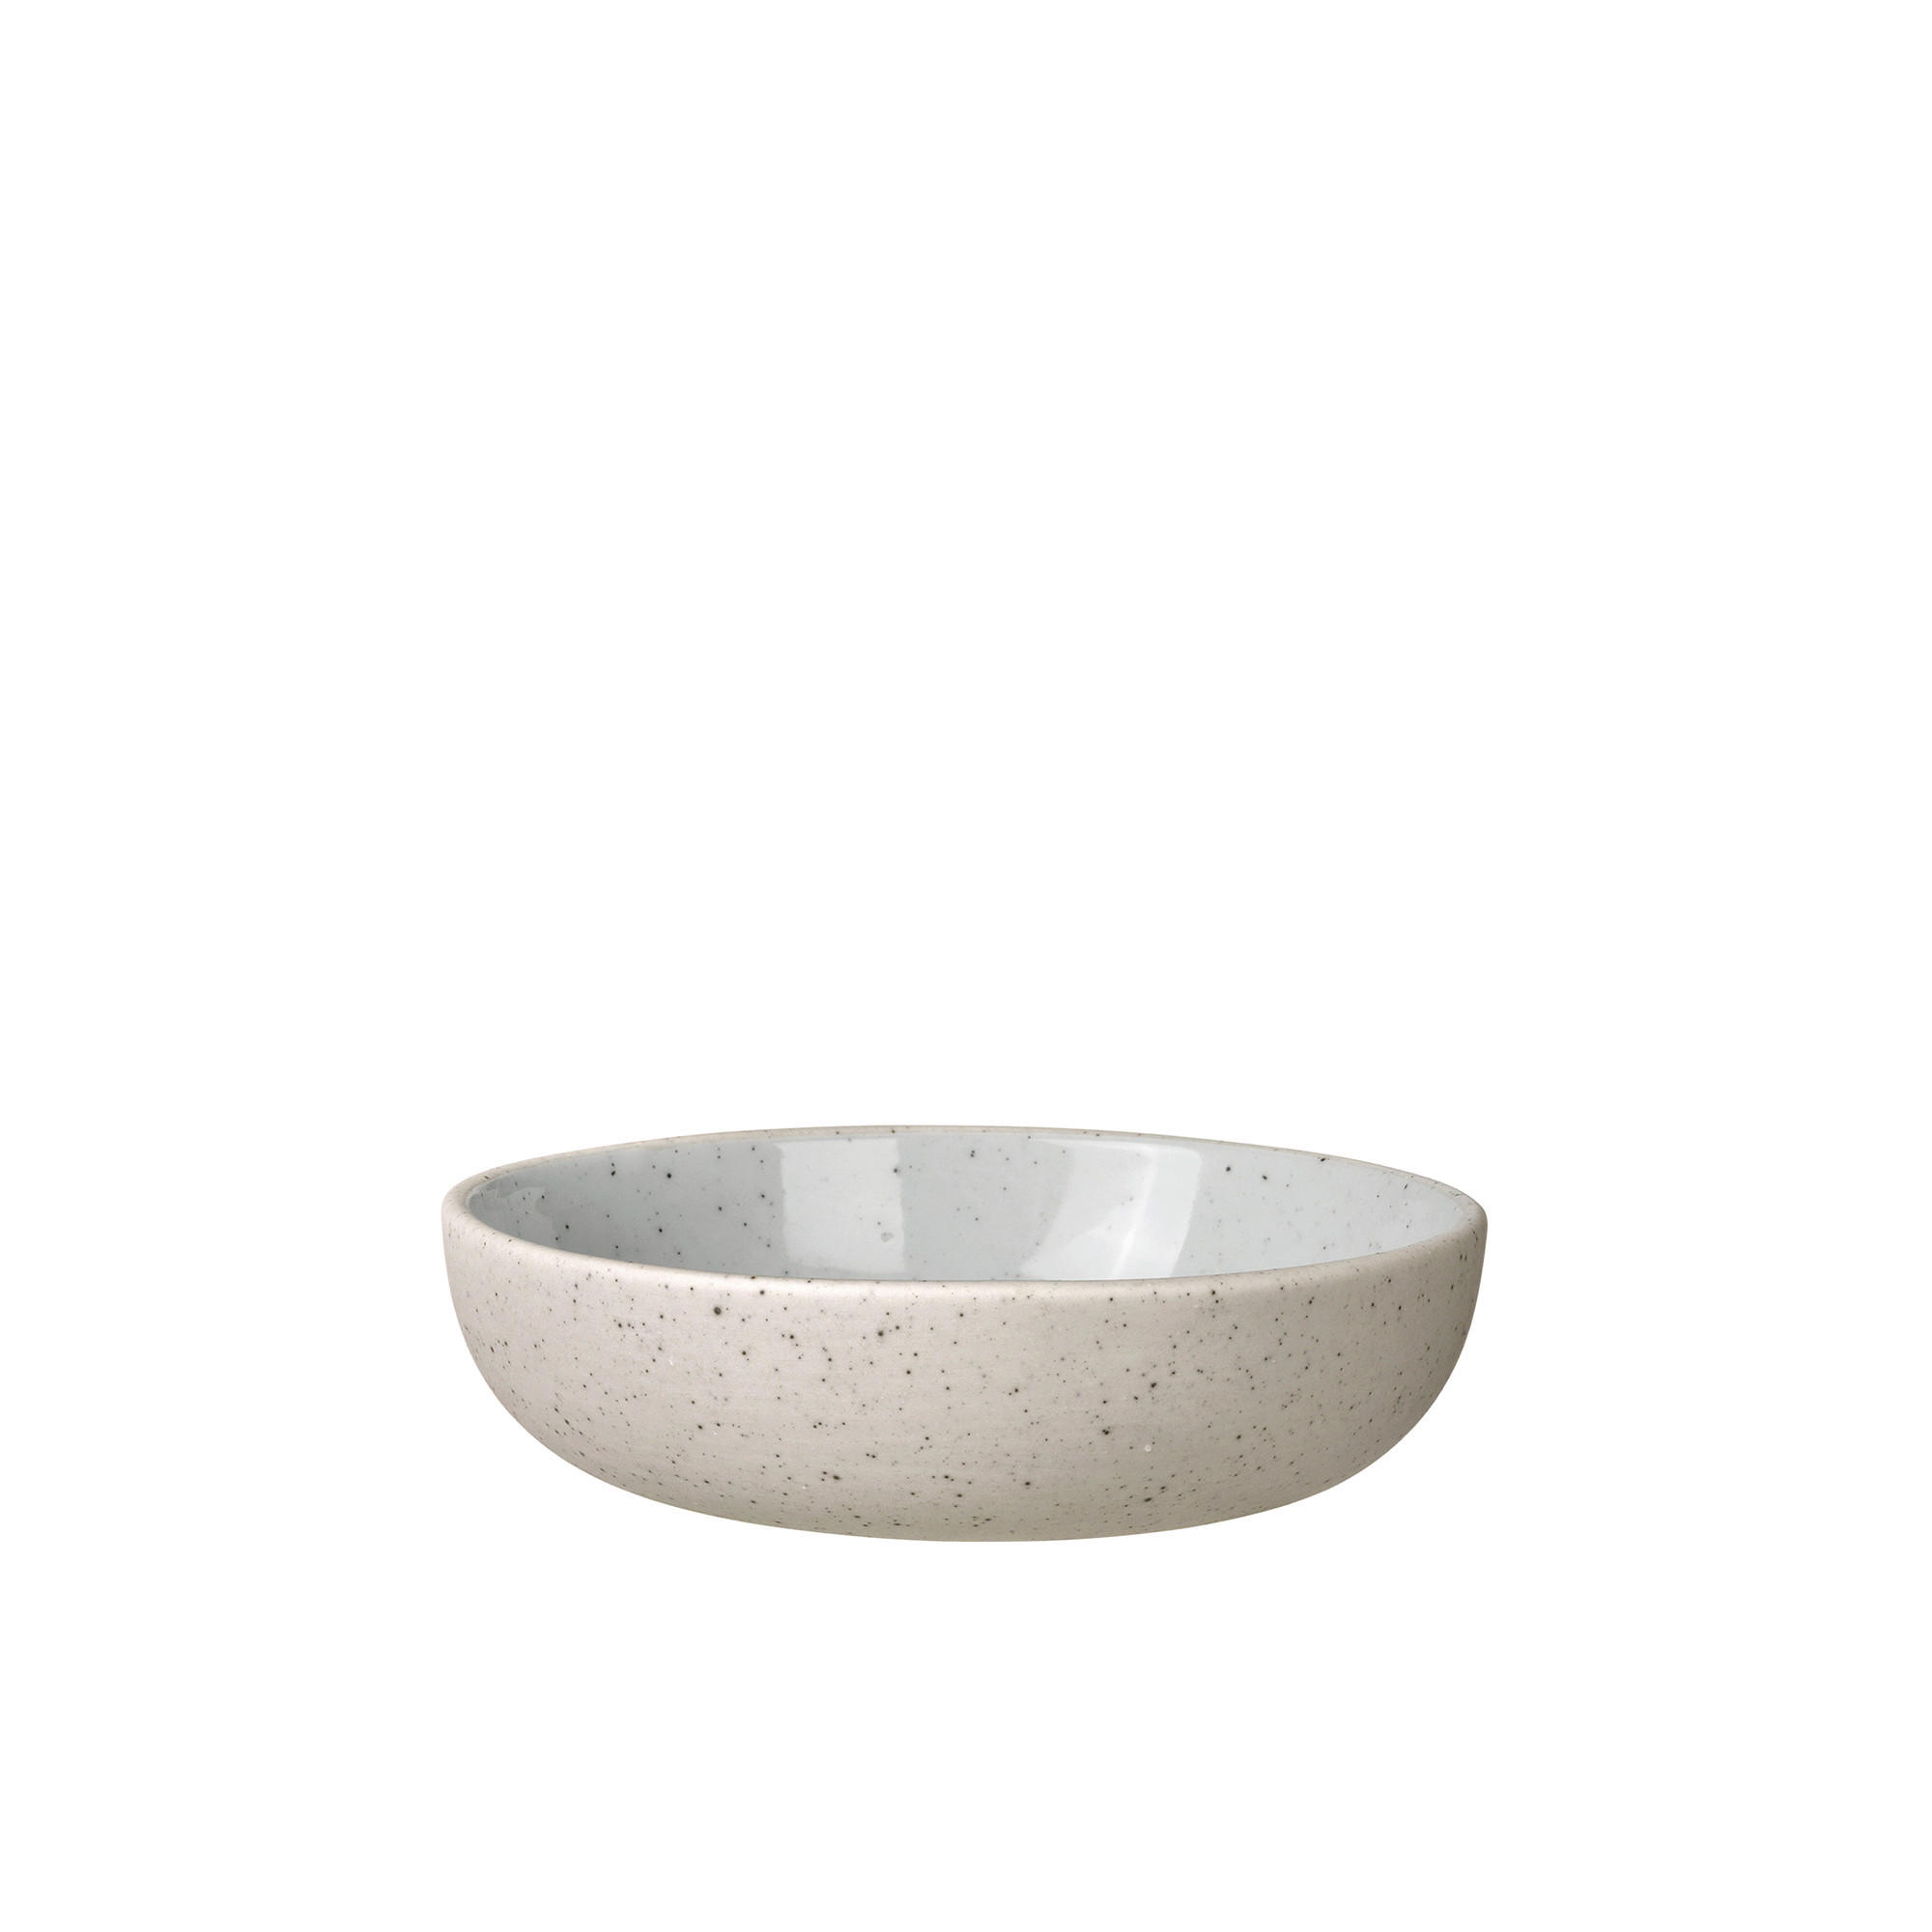 SNACKSCHALE Keramik  - Beige/Grau, Design, Keramik (10/3cm) - Blomus